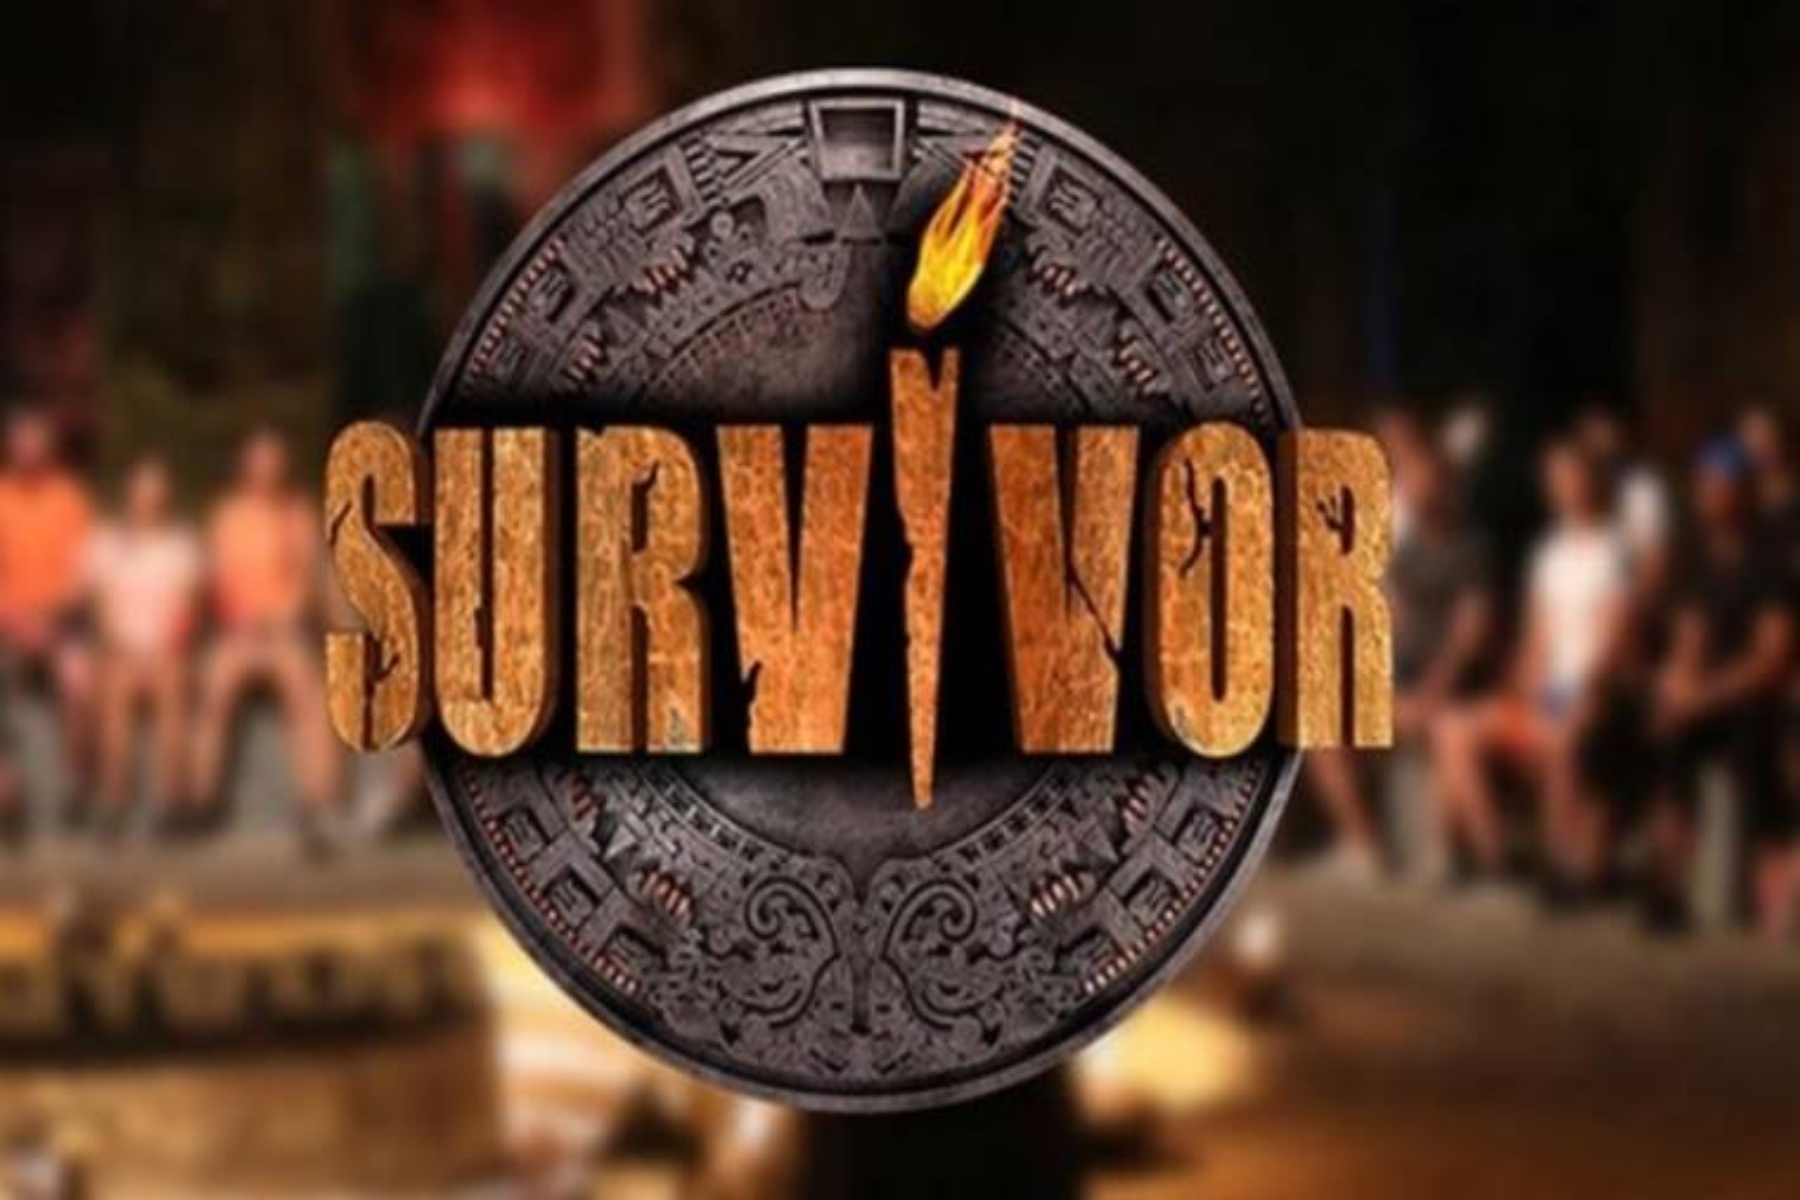 Survivor 19/03: Έκτακτο συμβούλιο του νησιού και περισσότερες εκπλήξεις [trailer]